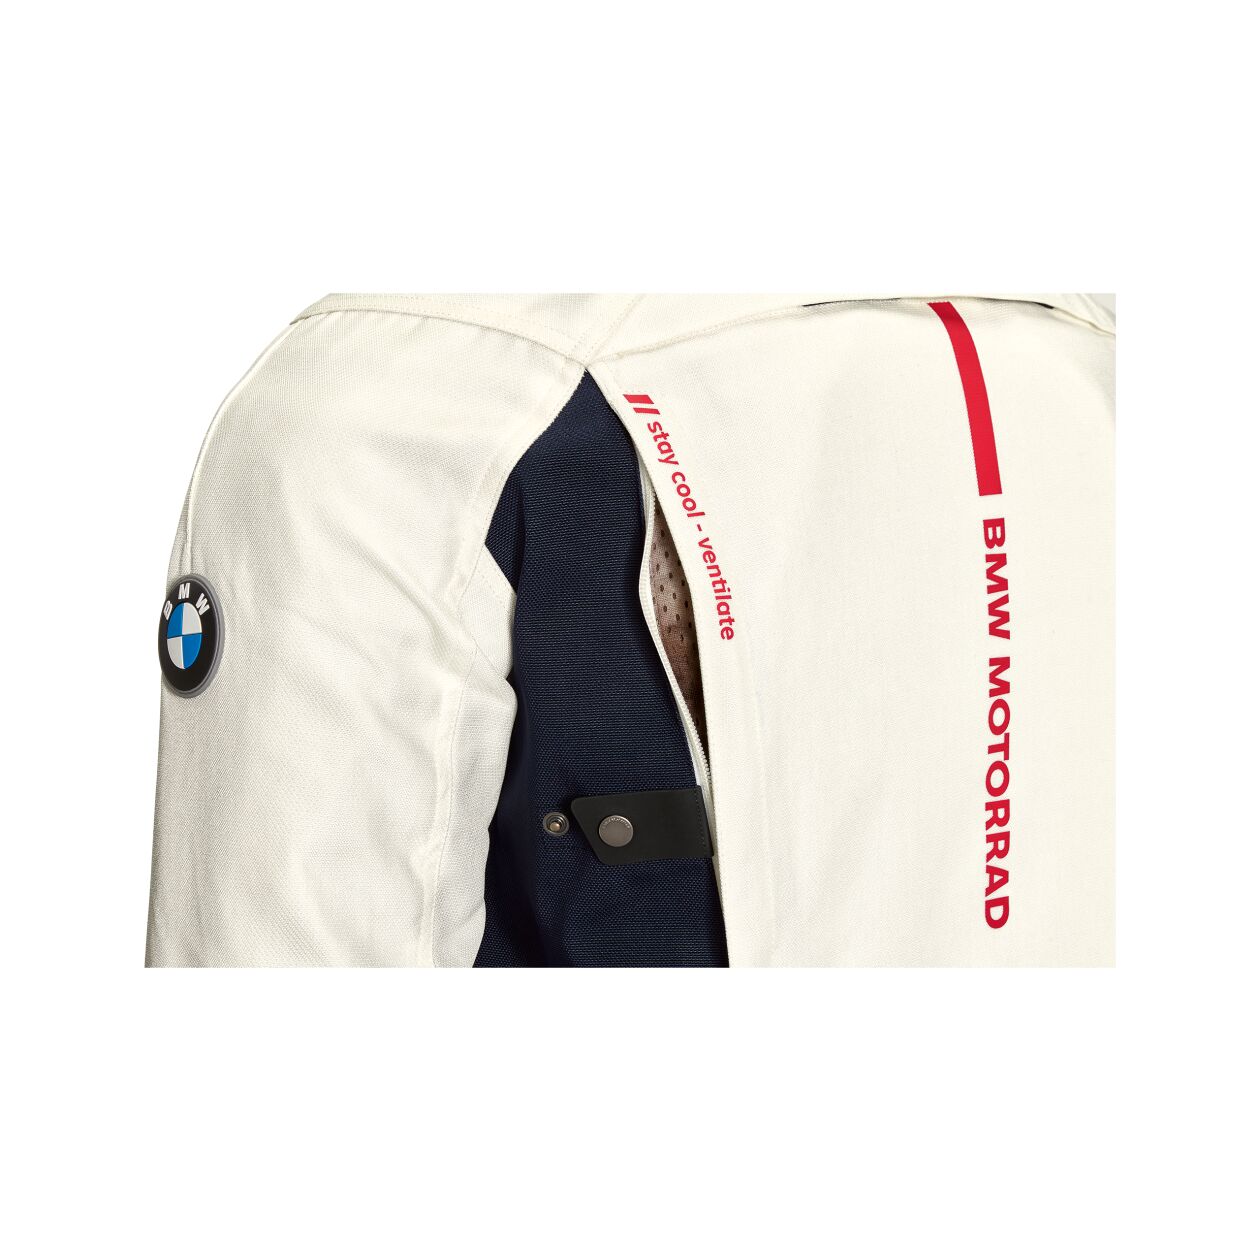 BMW Motorrad Rallye GTX Jacket - Blue/White